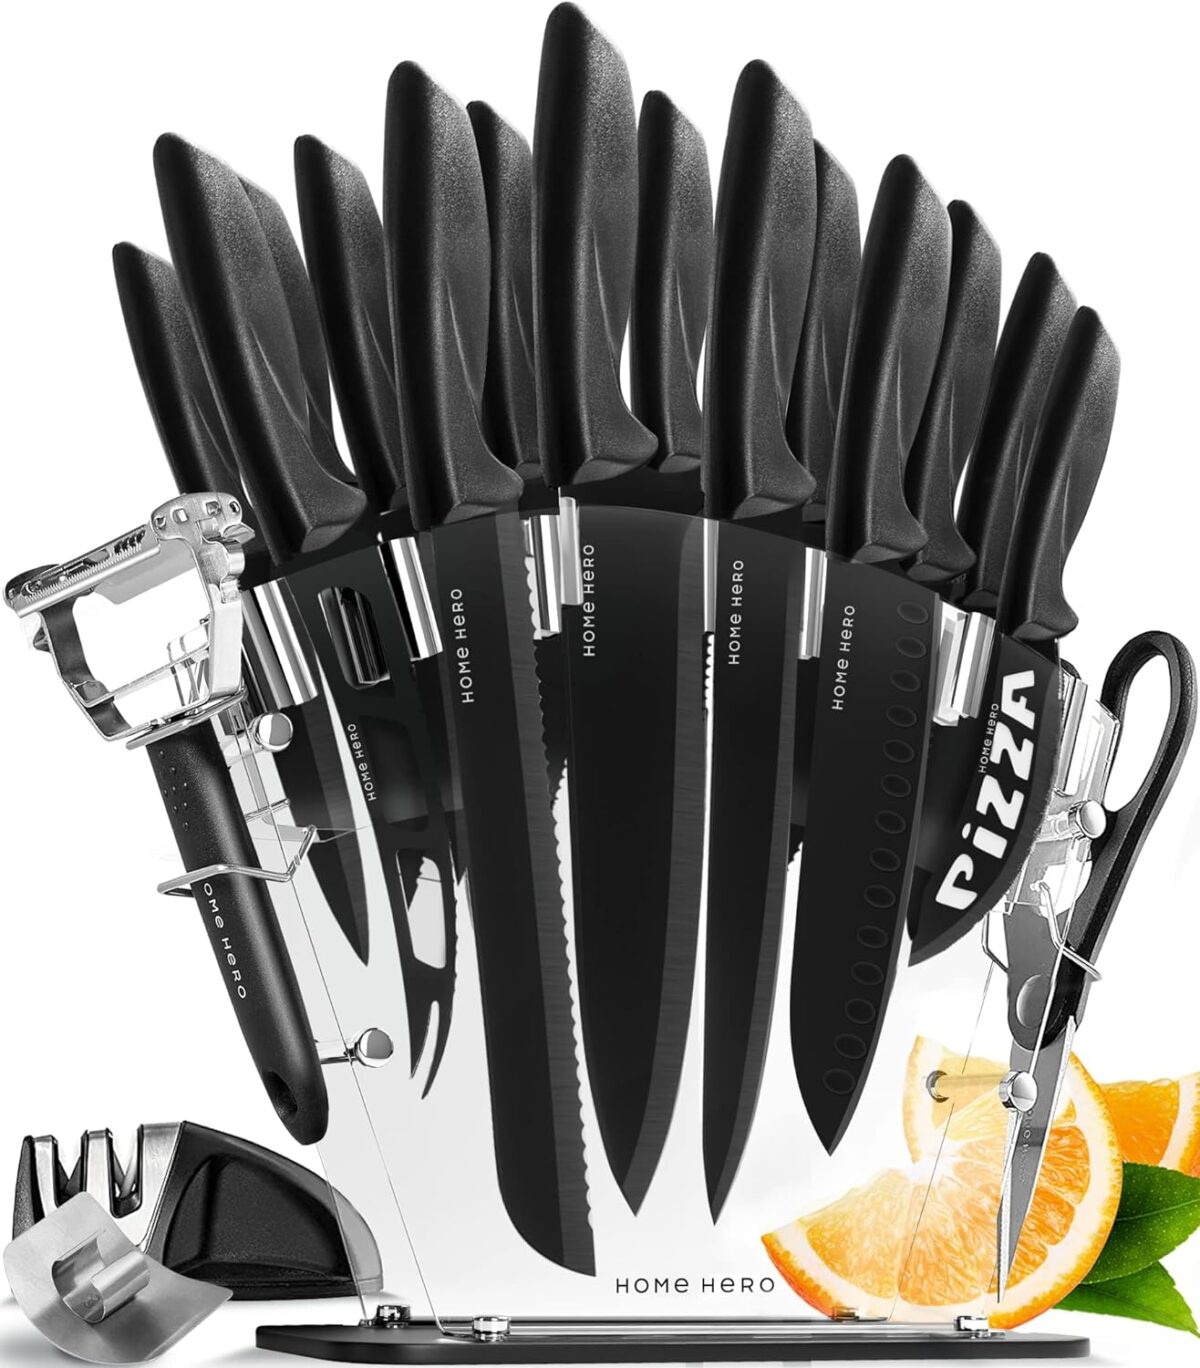 Home Hero Kitchen Knife Set, Chef Knife & Kitchen Sashimi Knives - Ultra-Sharp High Carbon Stainless Steel Knives with Ergonomic Handles (20 Pcs - Black)